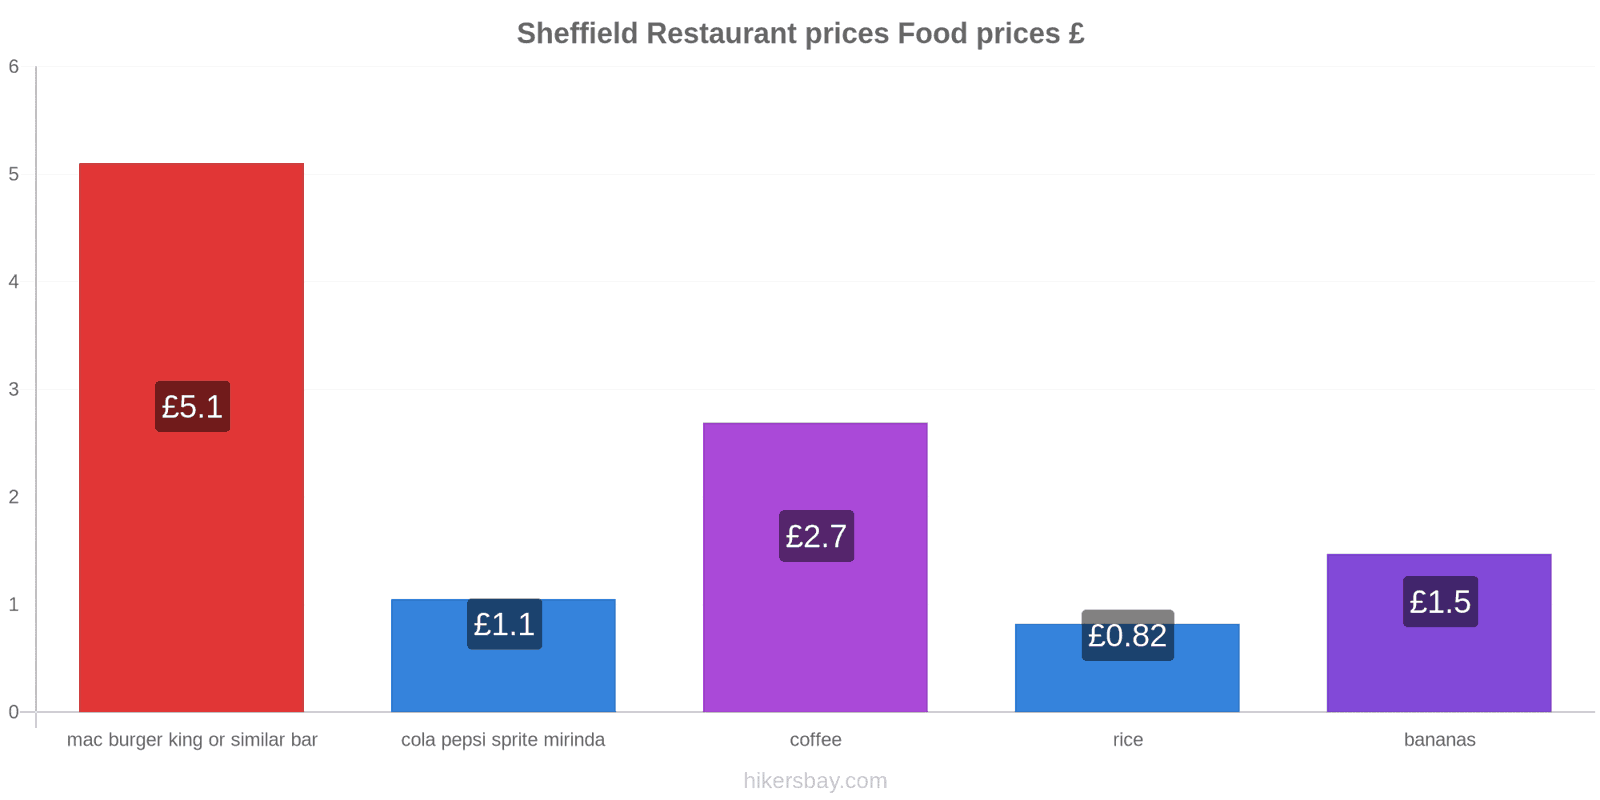 Sheffield price changes hikersbay.com